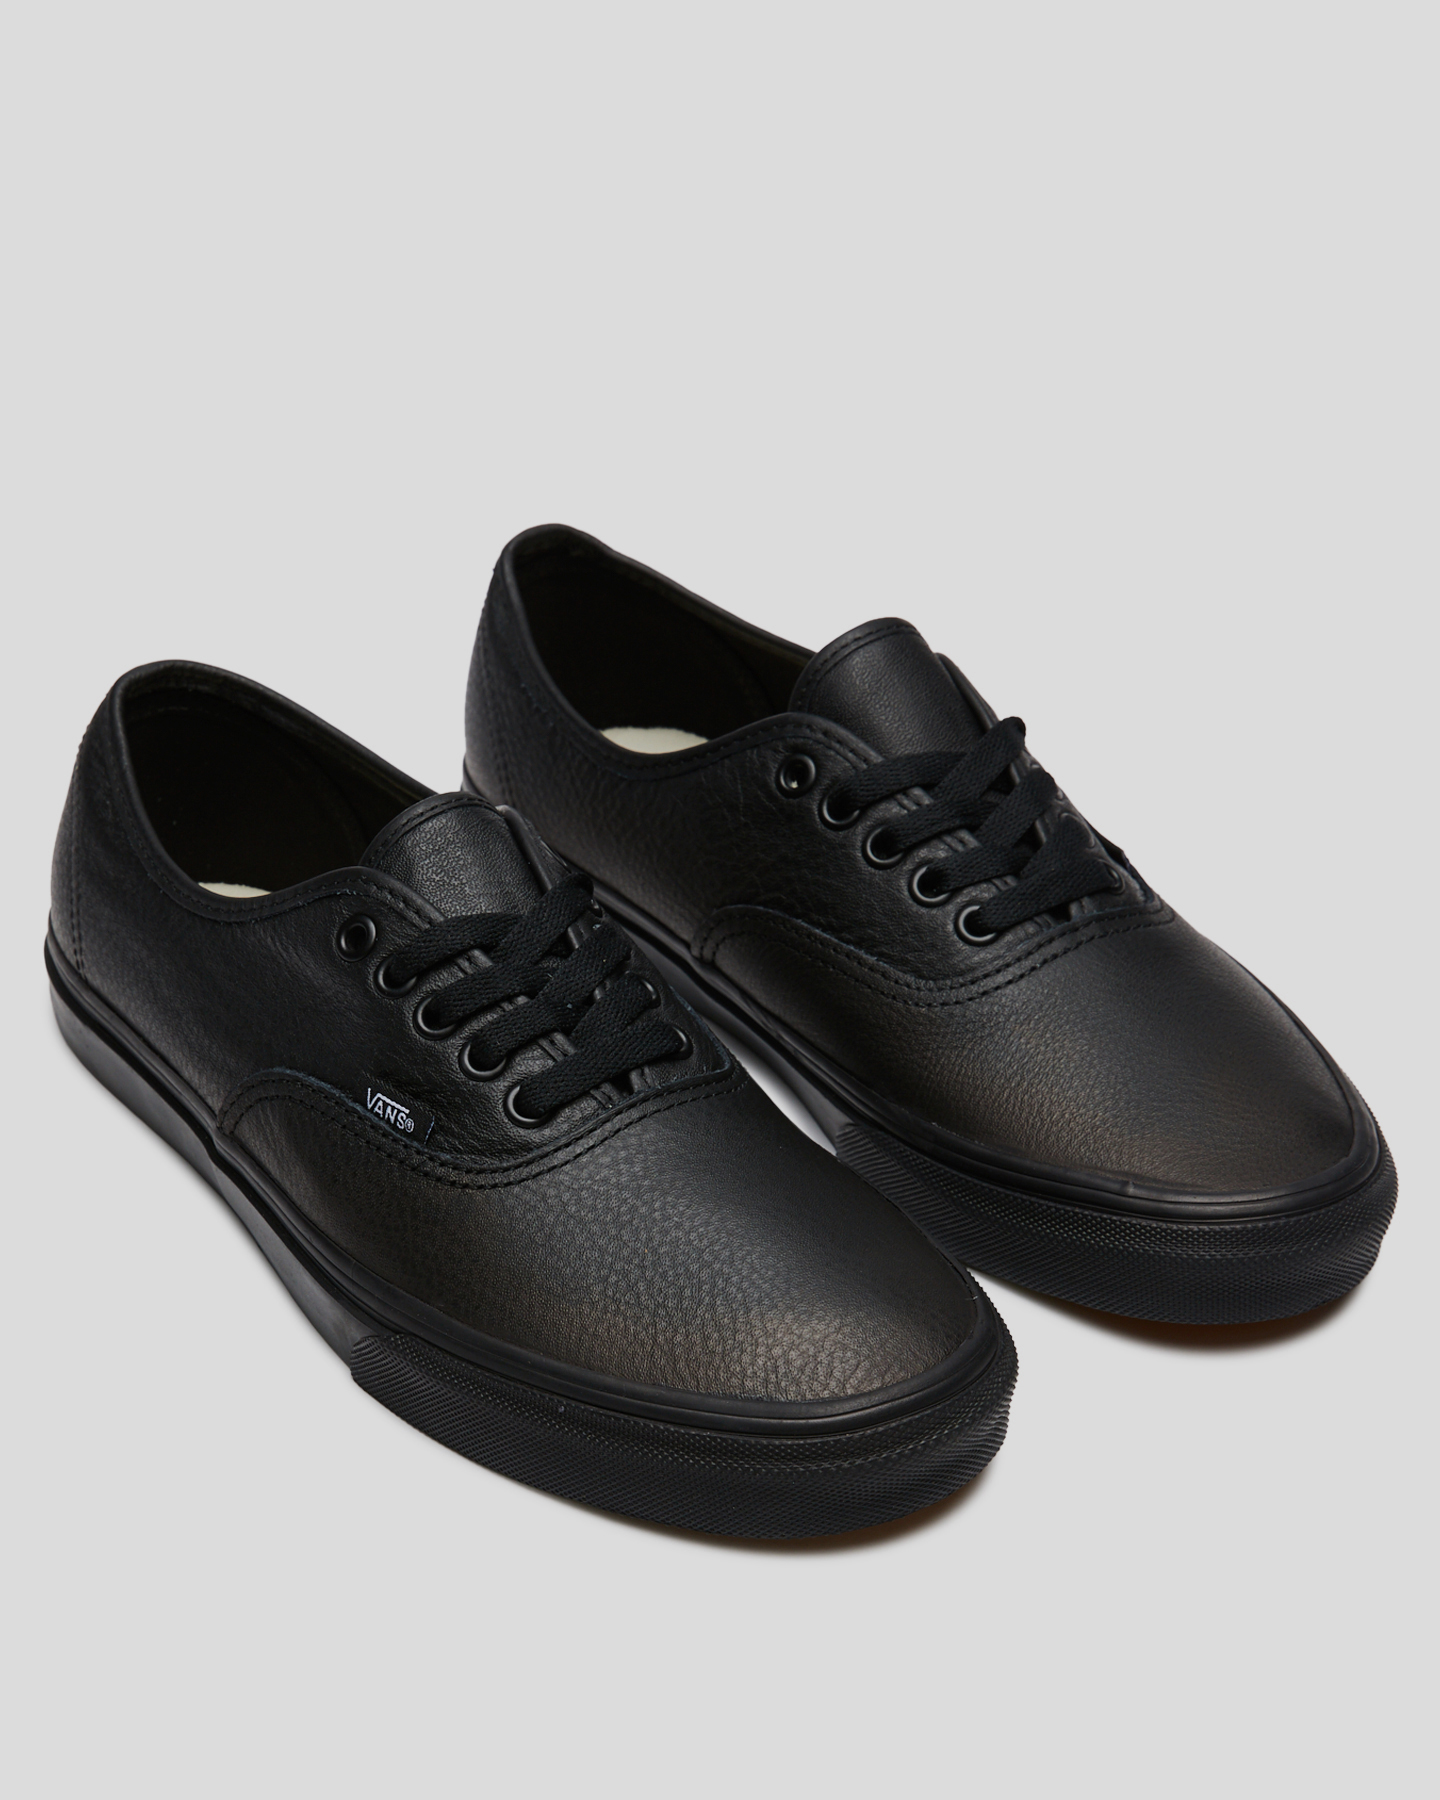 vans black leather shoes uk